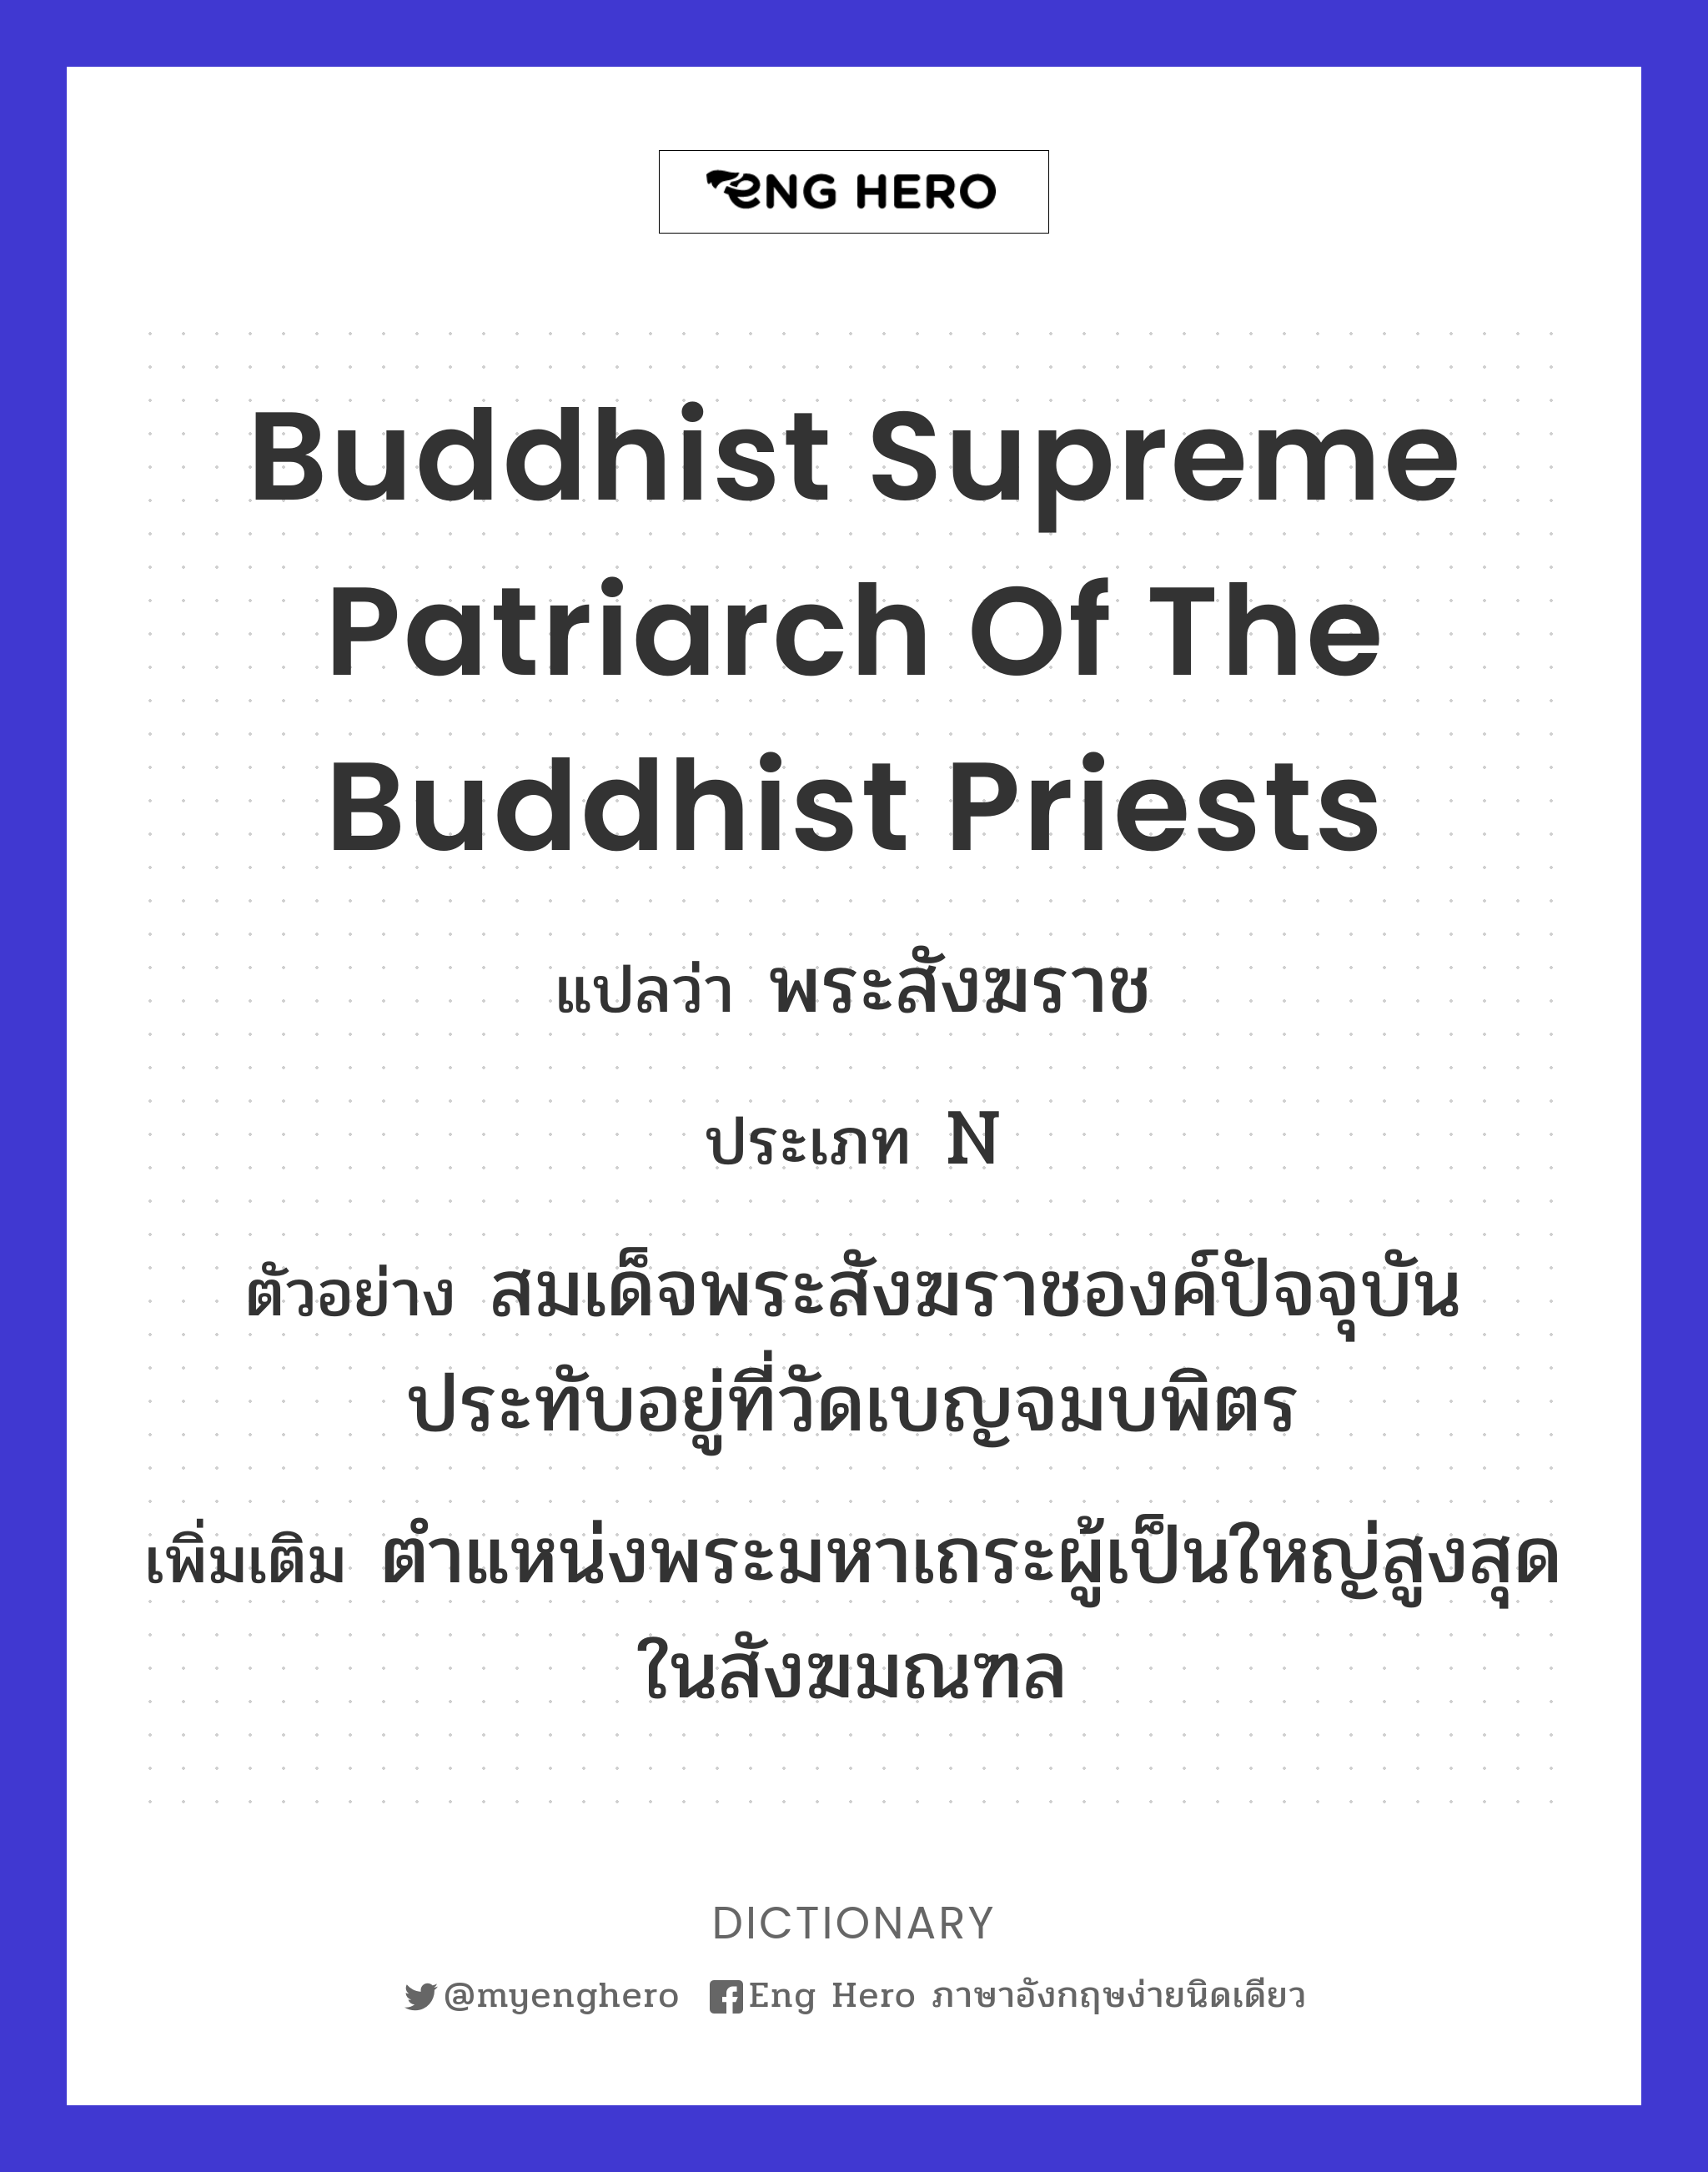 Buddhist supreme patriarch of the Buddhist priests